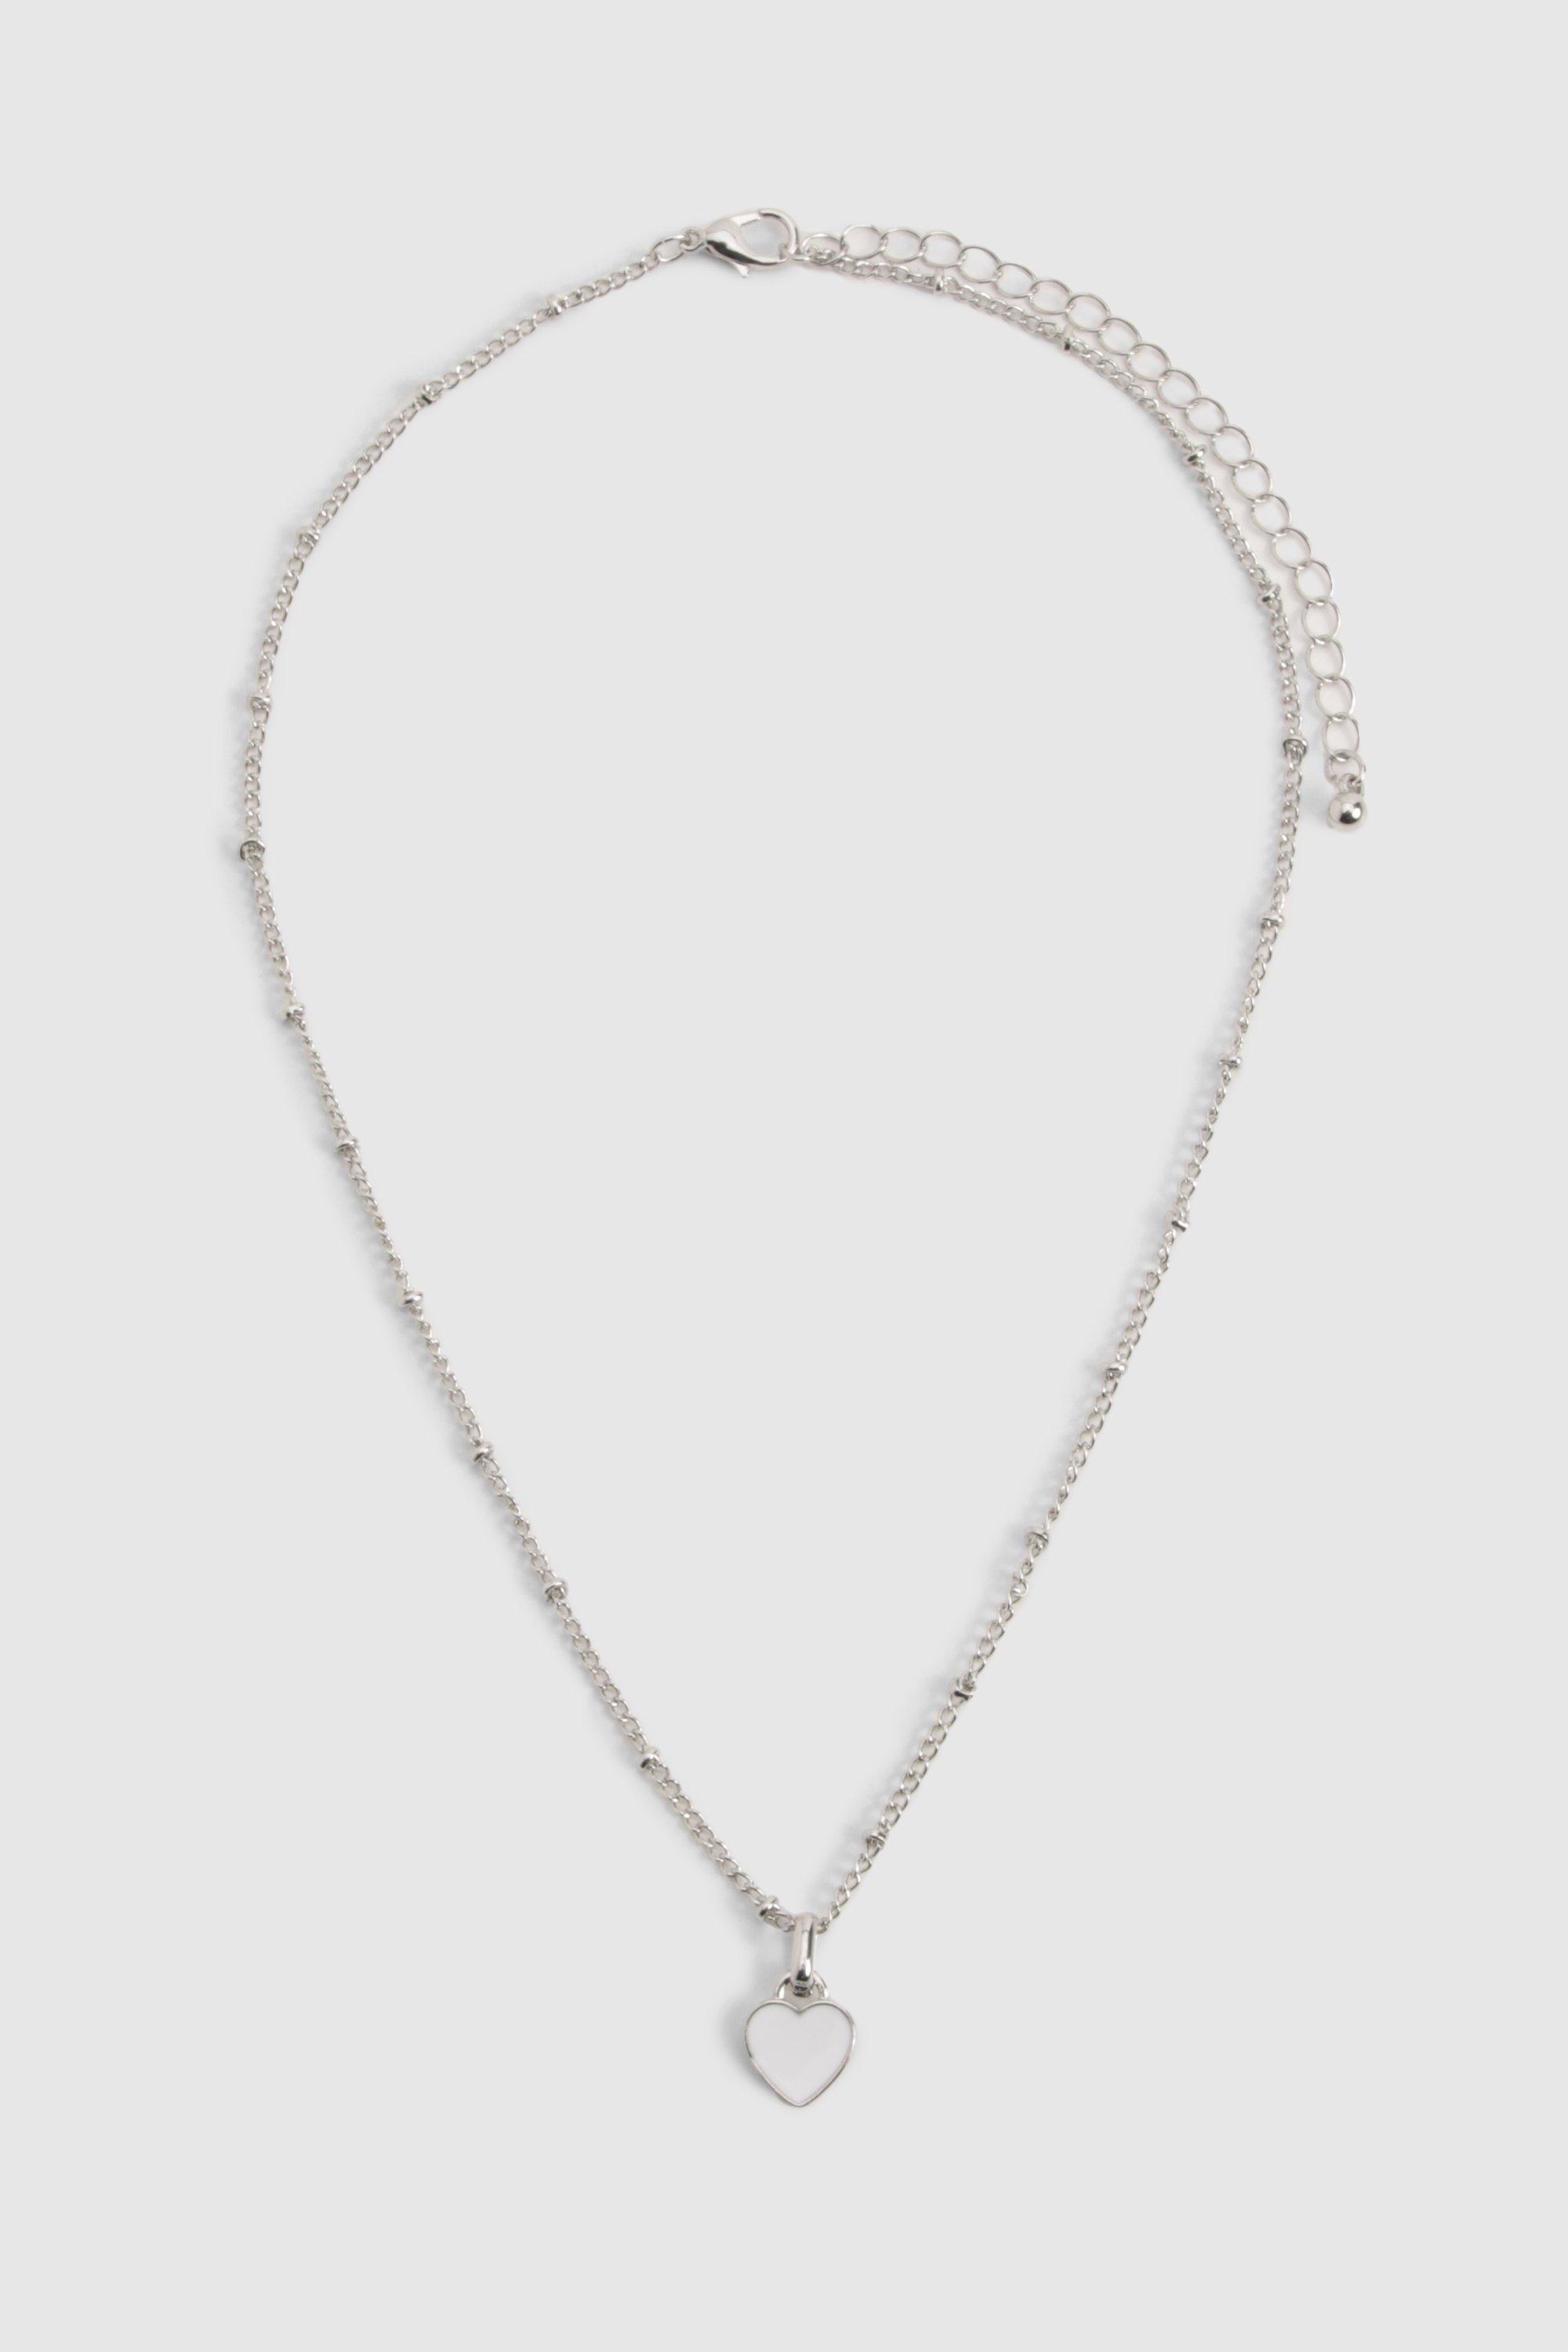 Image of White Enamel Heart Necklace, Grigio